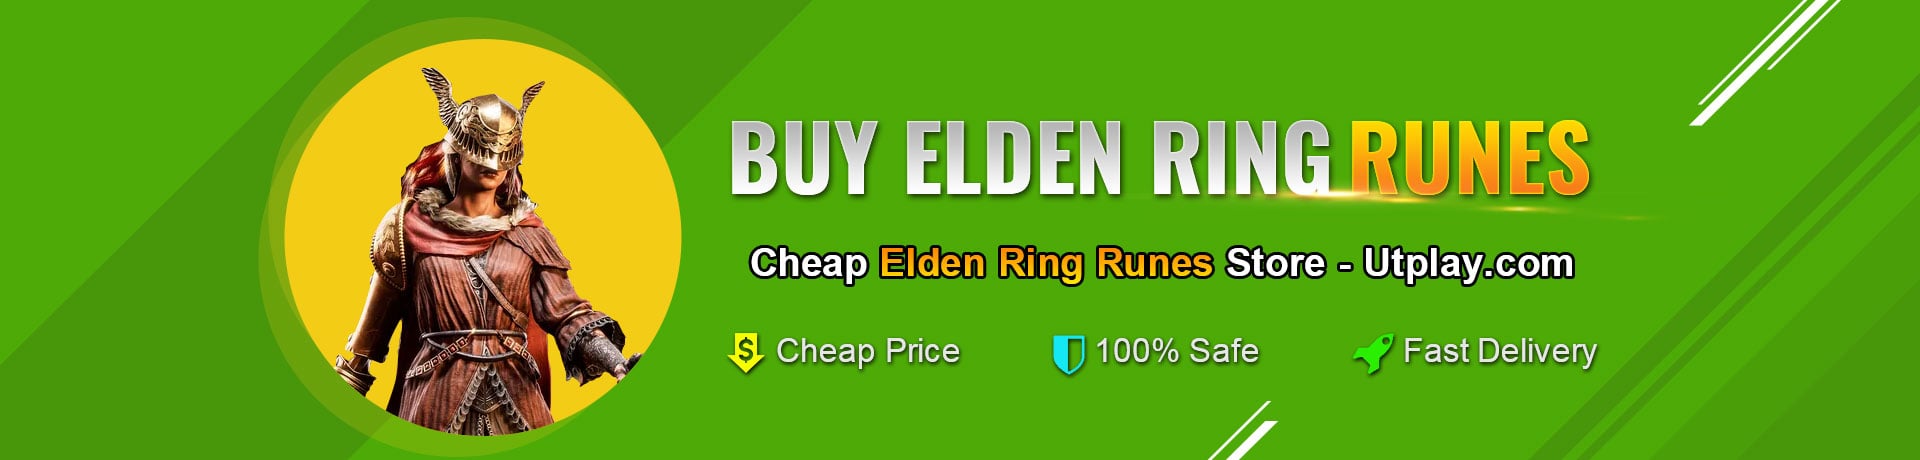 Buy Cheap And Fast Elden Ring Runes Online